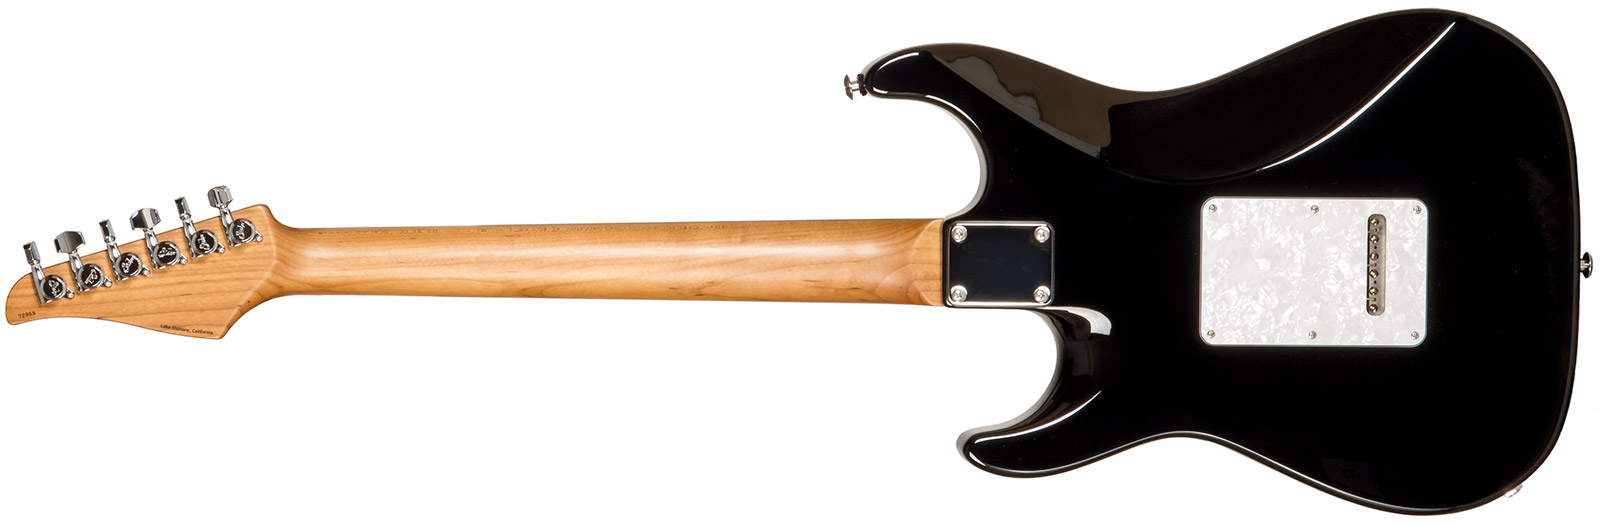 Suhr Standard Plus Usa Hss Trem Pf #72959 - Bengal Burst - Str shape electric guitar - Variation 1